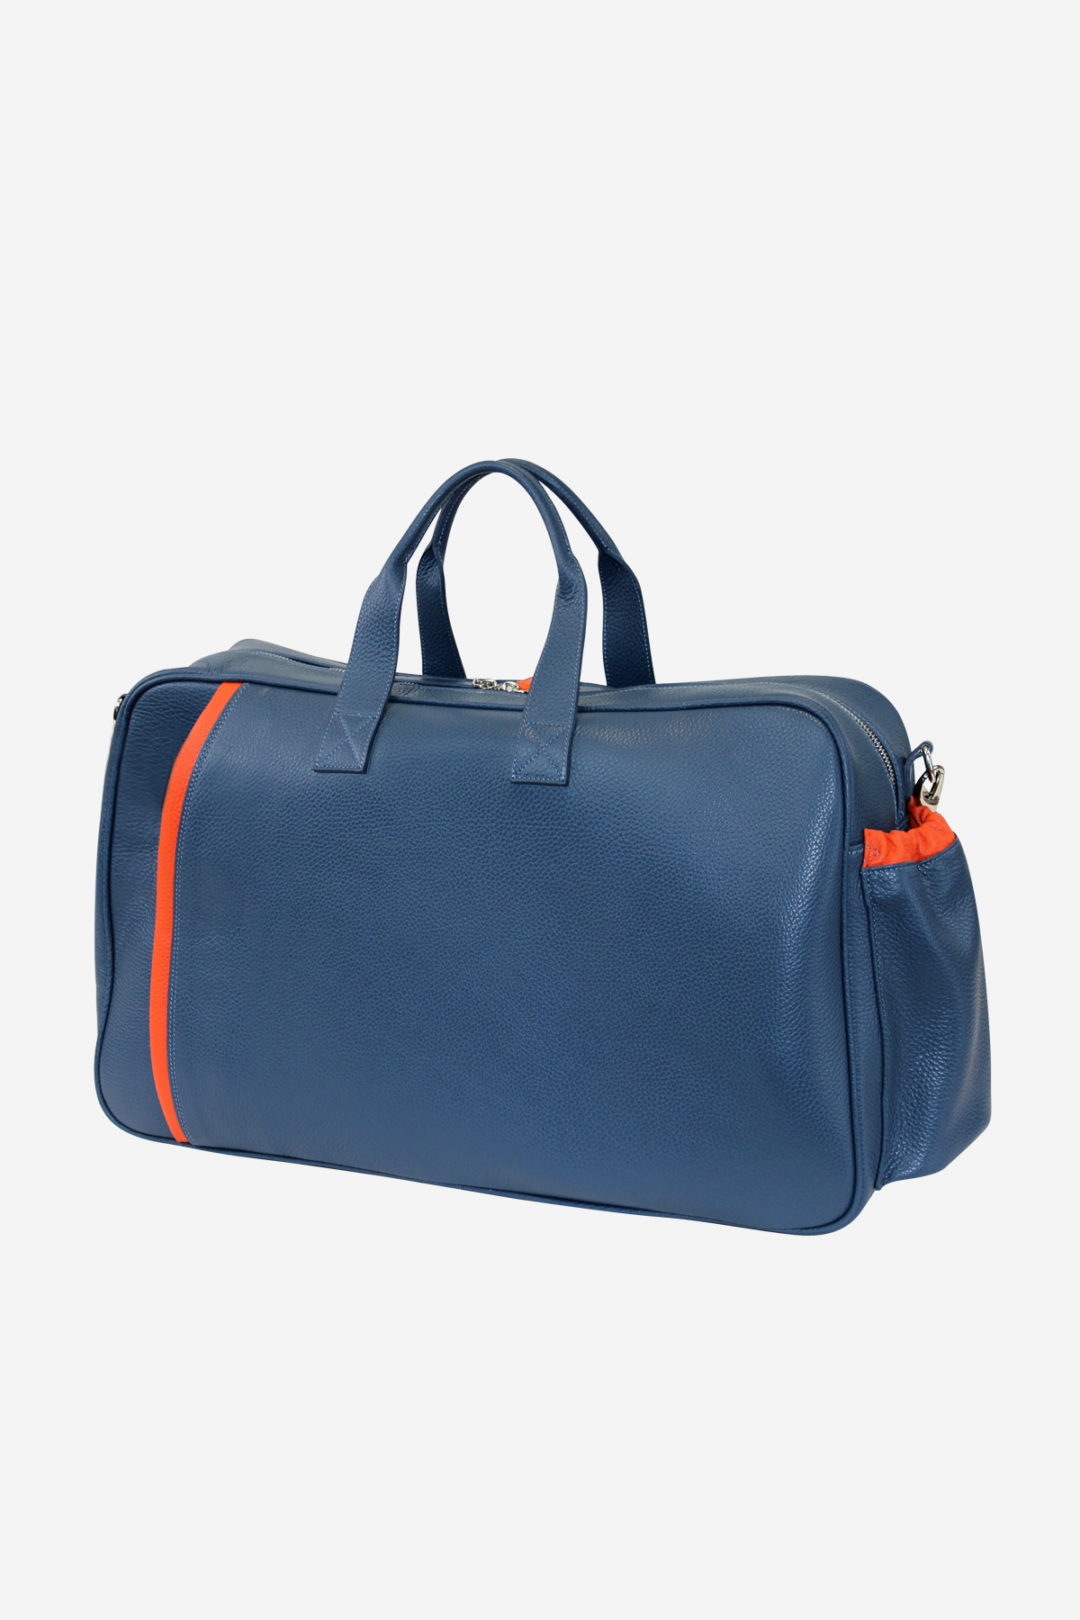 Lightning Sport Bag resistant waterproof leather madeinitaly